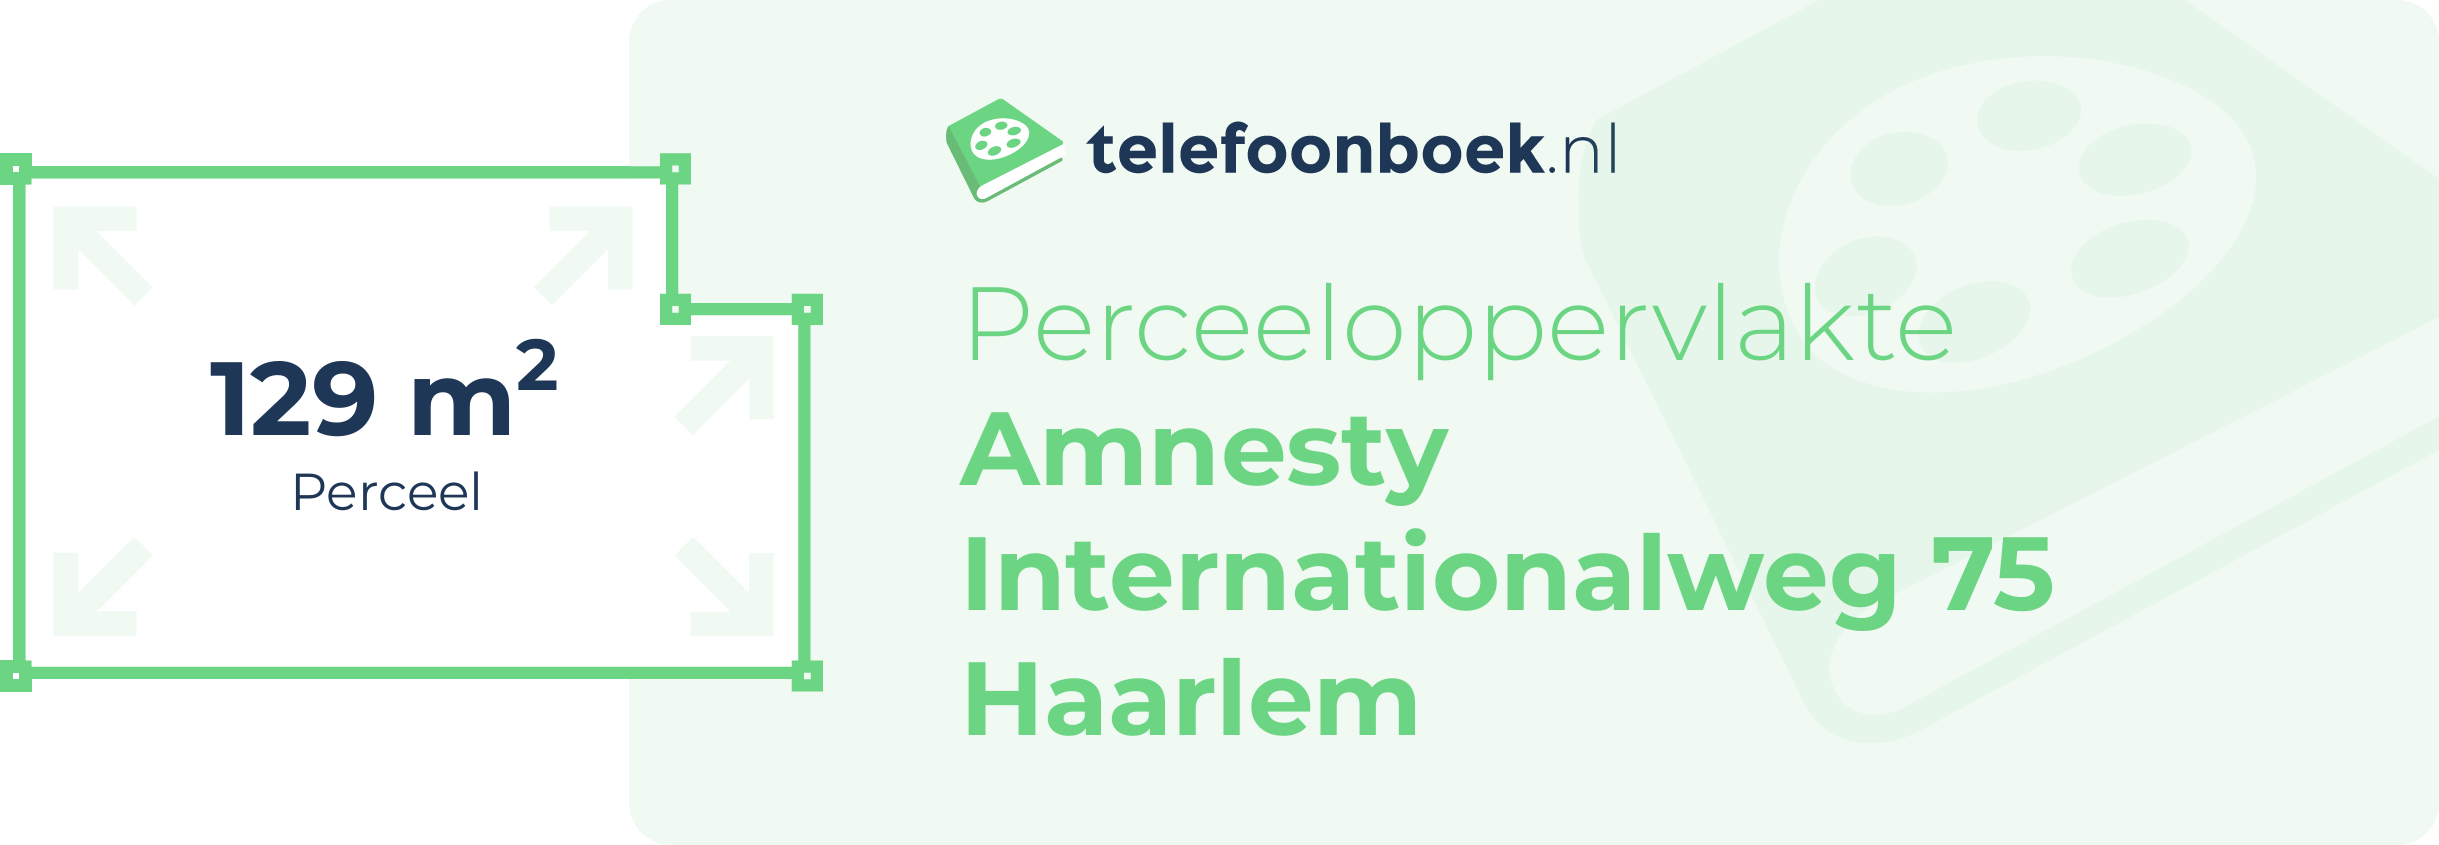 Perceeloppervlakte Amnesty Internationalweg 75 Haarlem